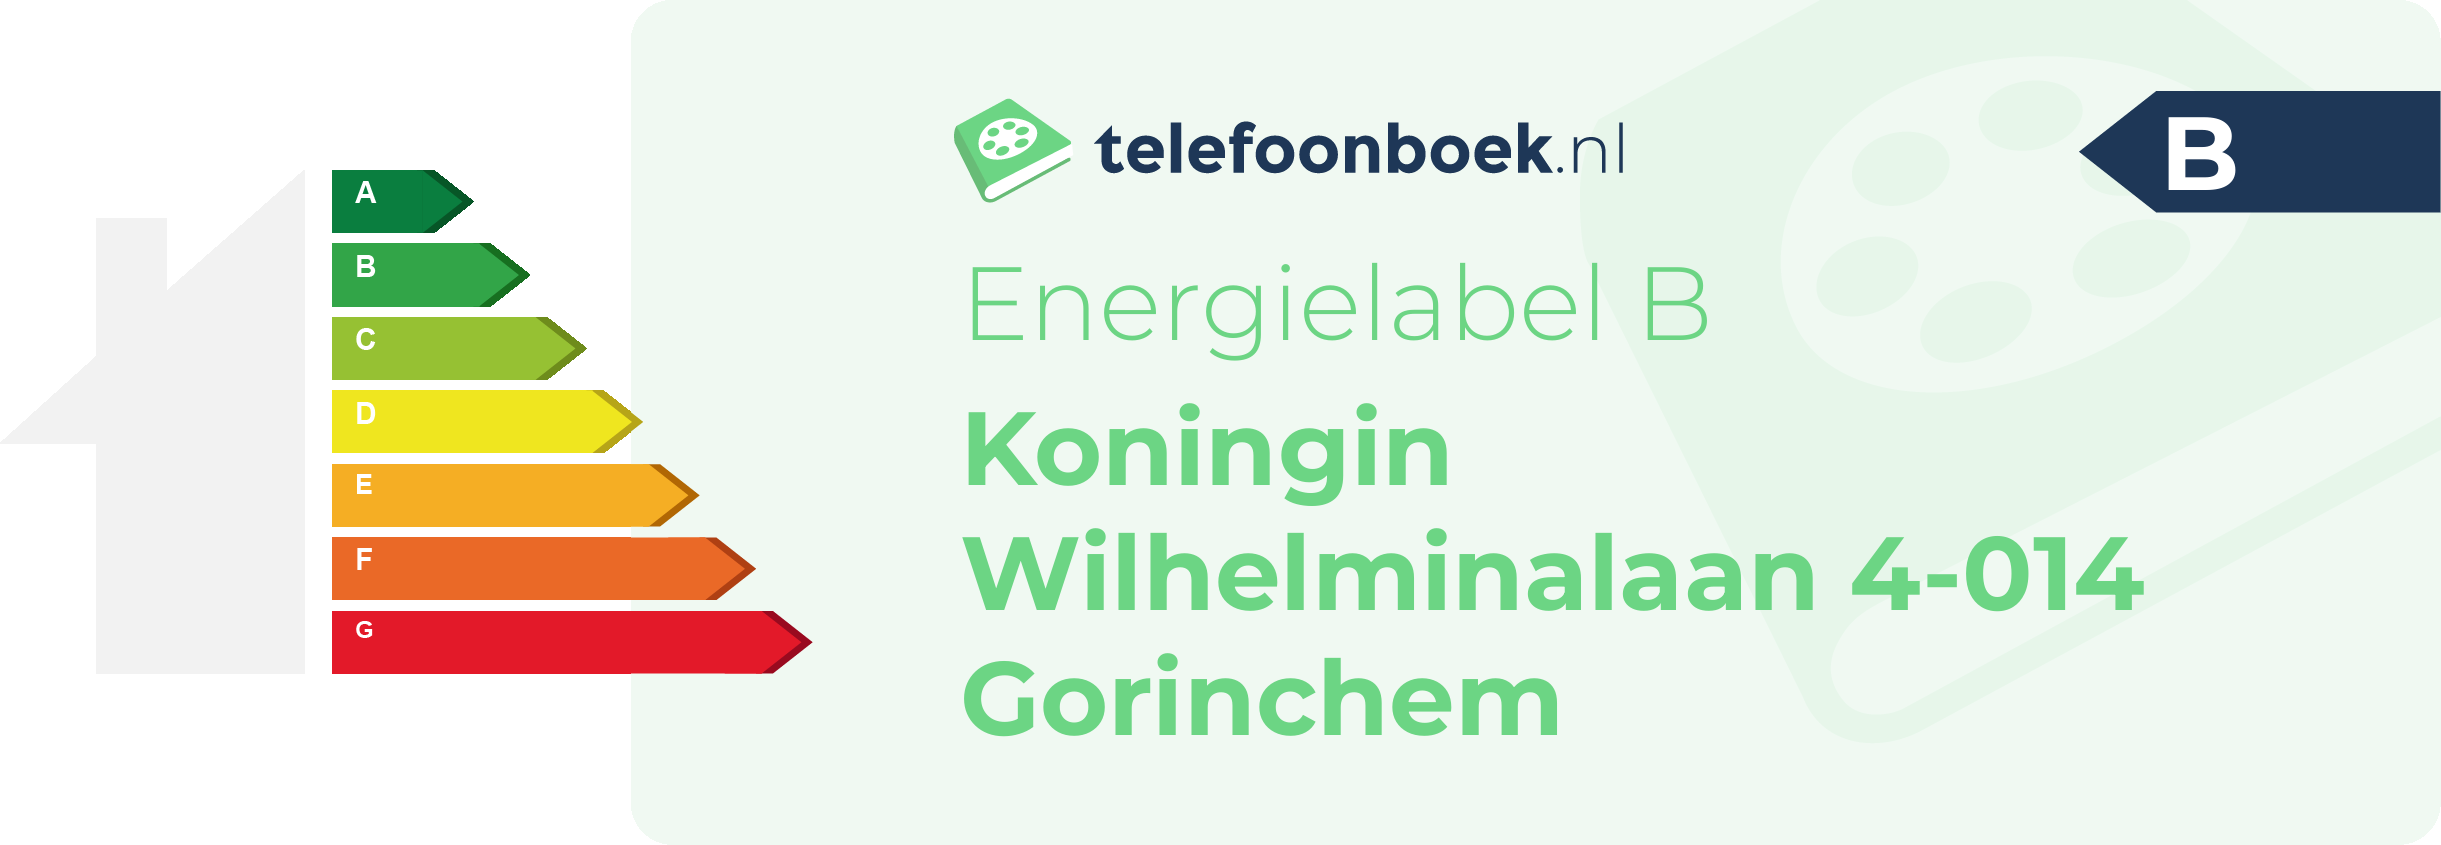 Energielabel Koningin Wilhelminalaan 4-014 Gorinchem